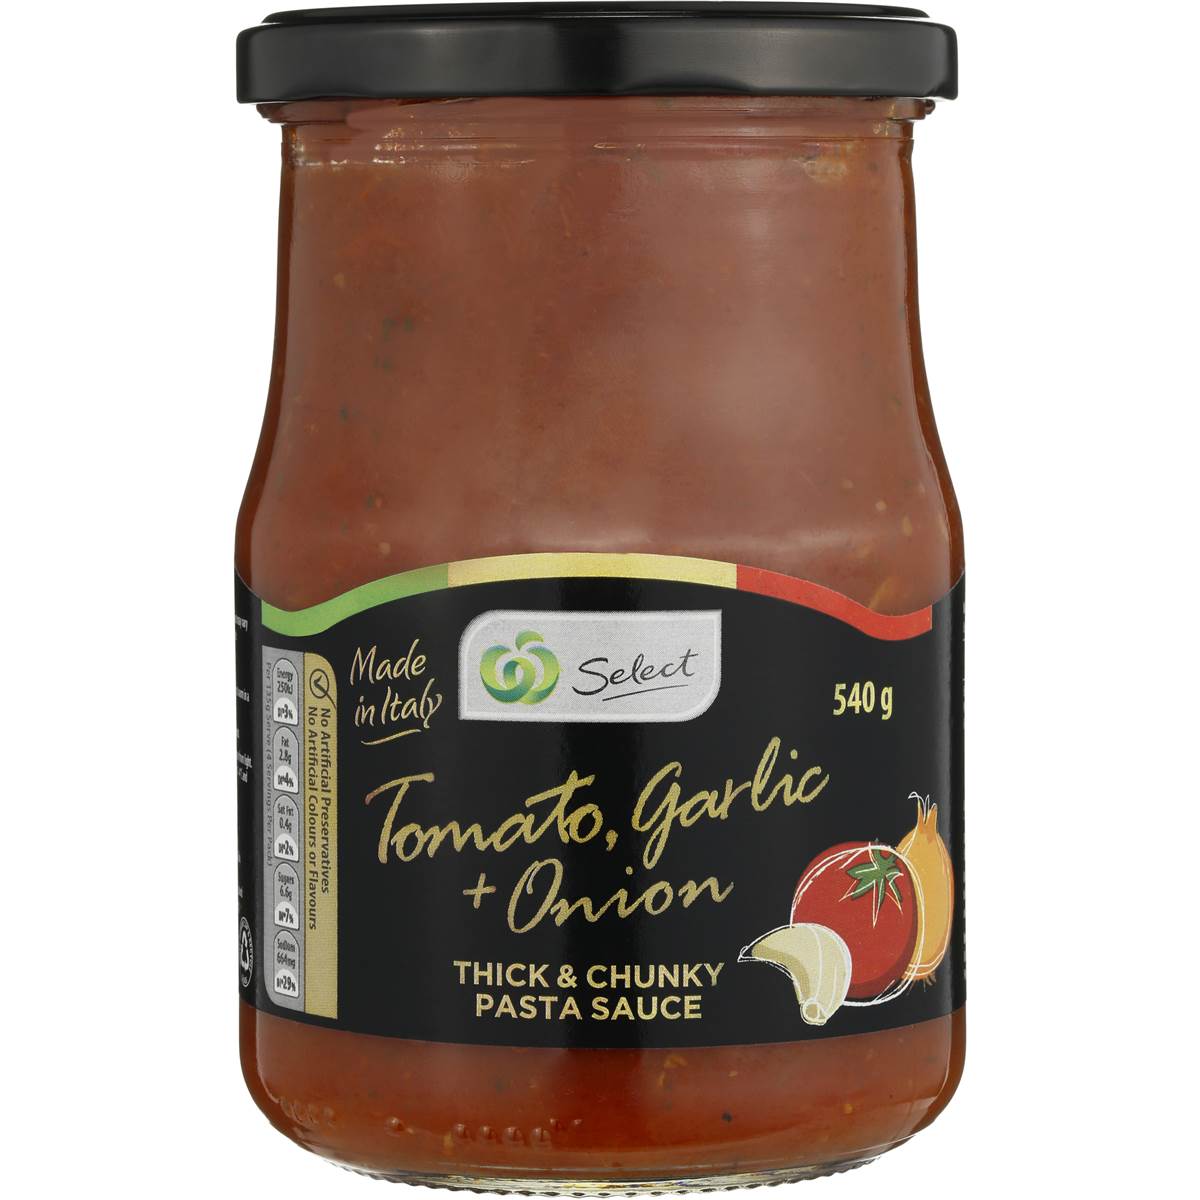 Woolworths Select Pasta Sauce Tomato Onion Garlic